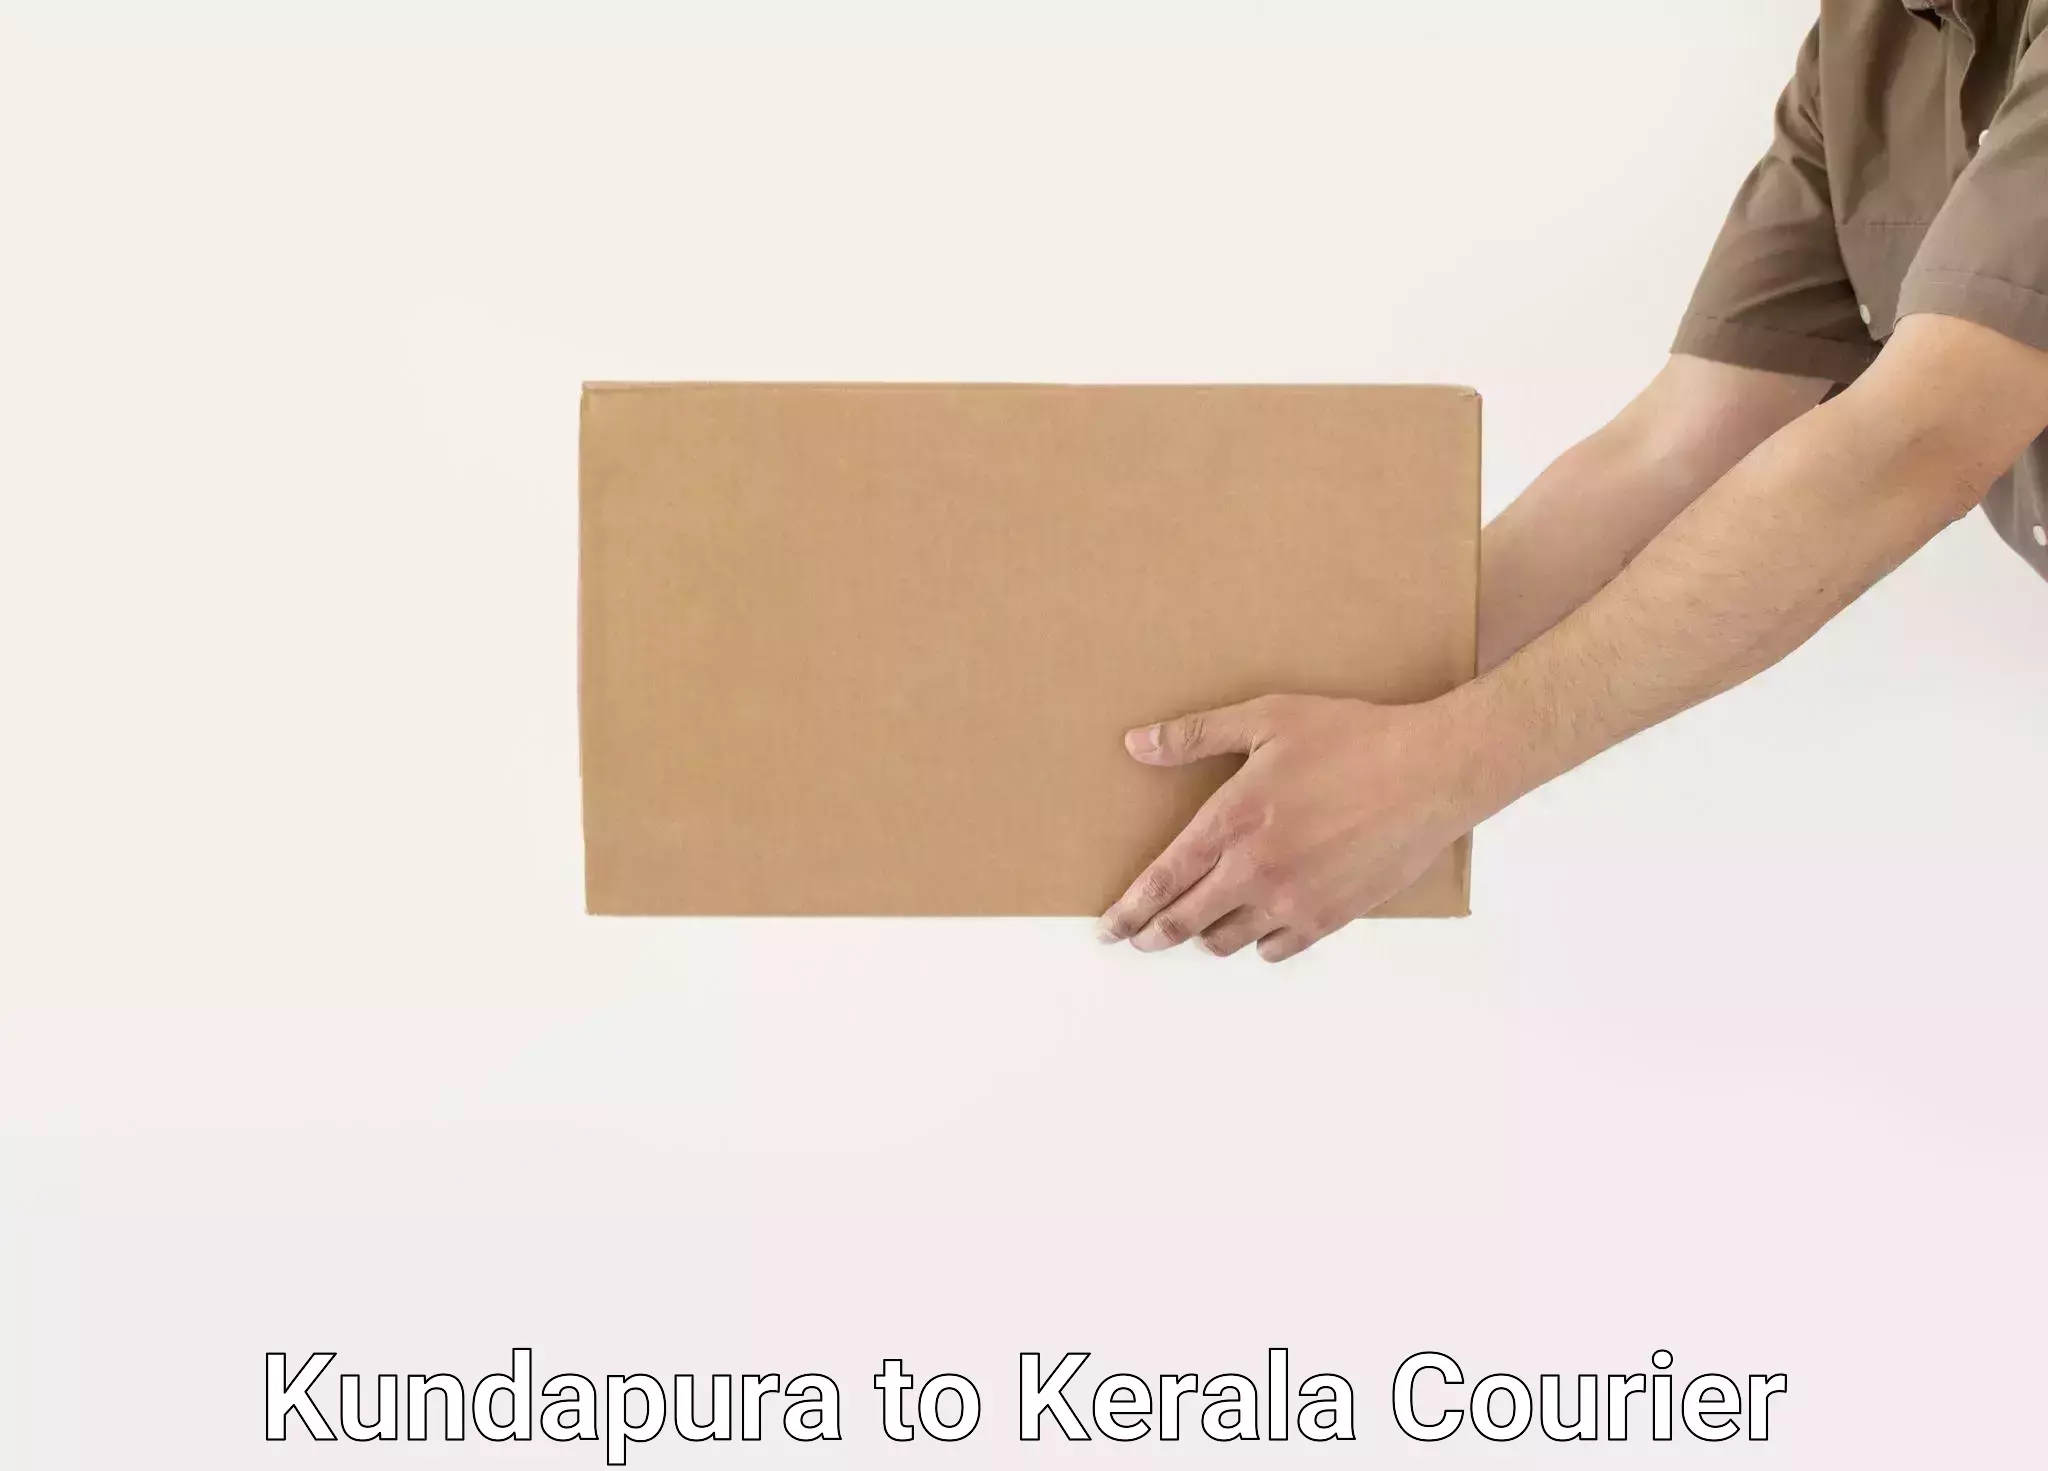 Moving and packing experts Kundapura to Kerala